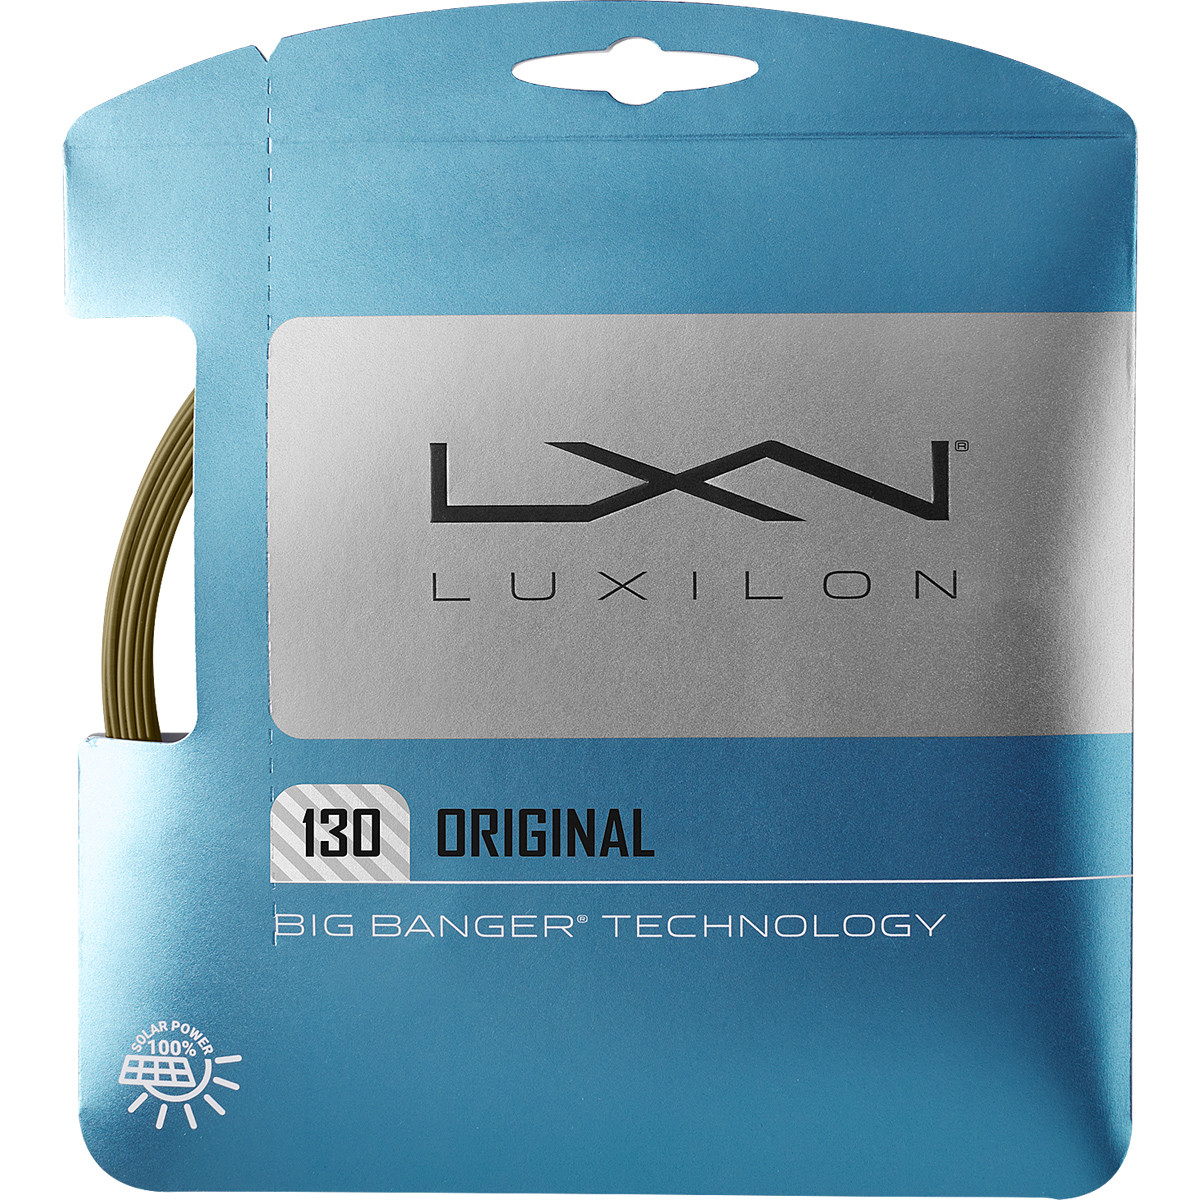 Cordage Luxilon Big Banger Original 130